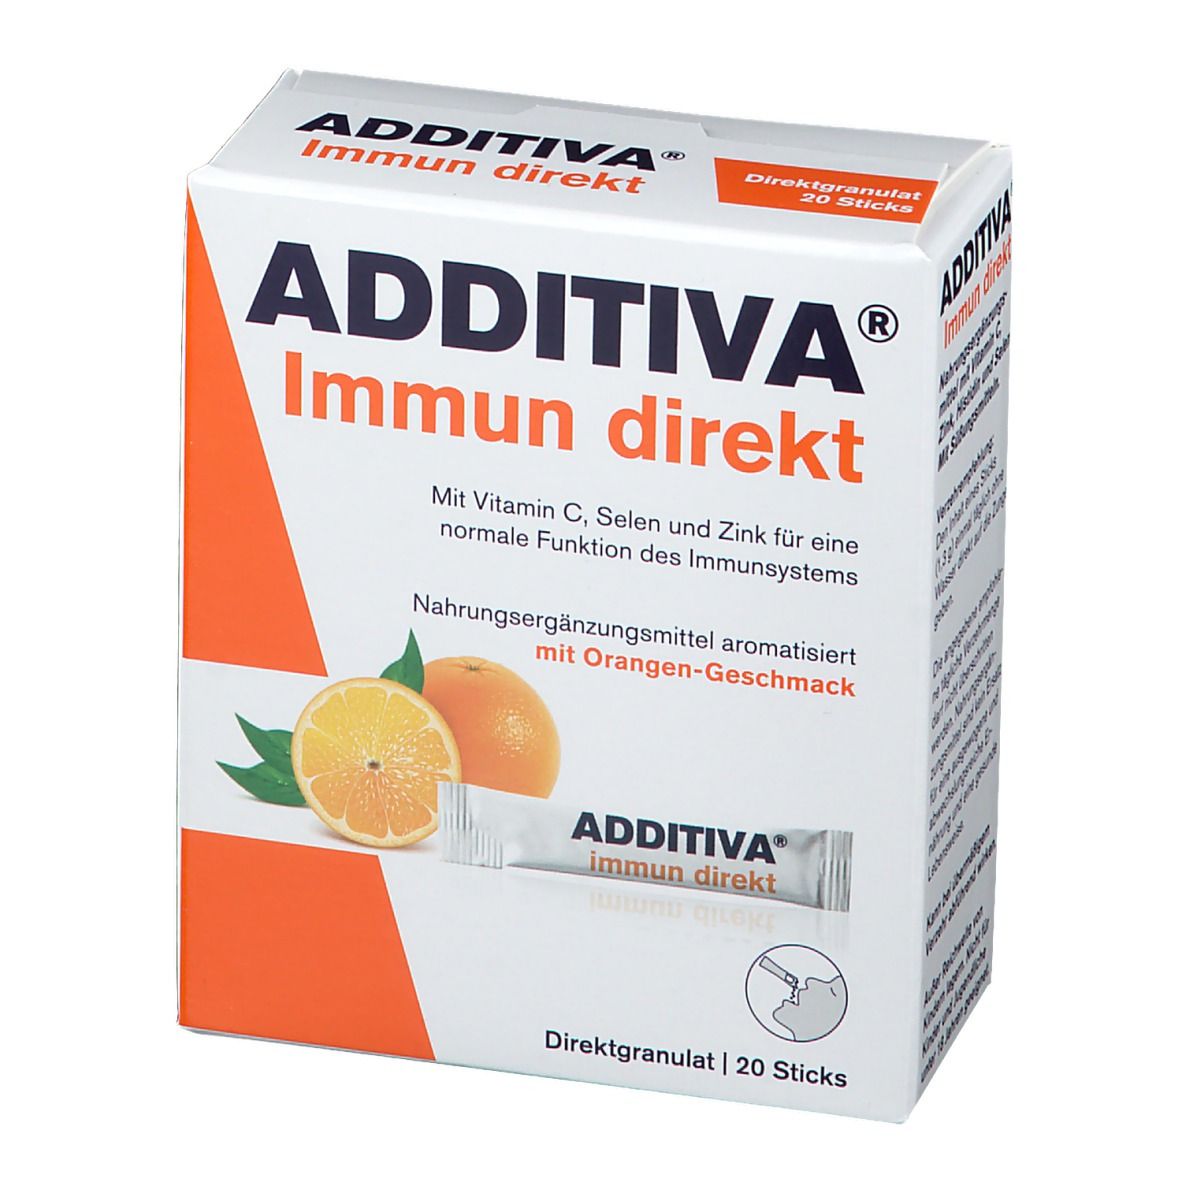 ADDITIVA® Immun direkt